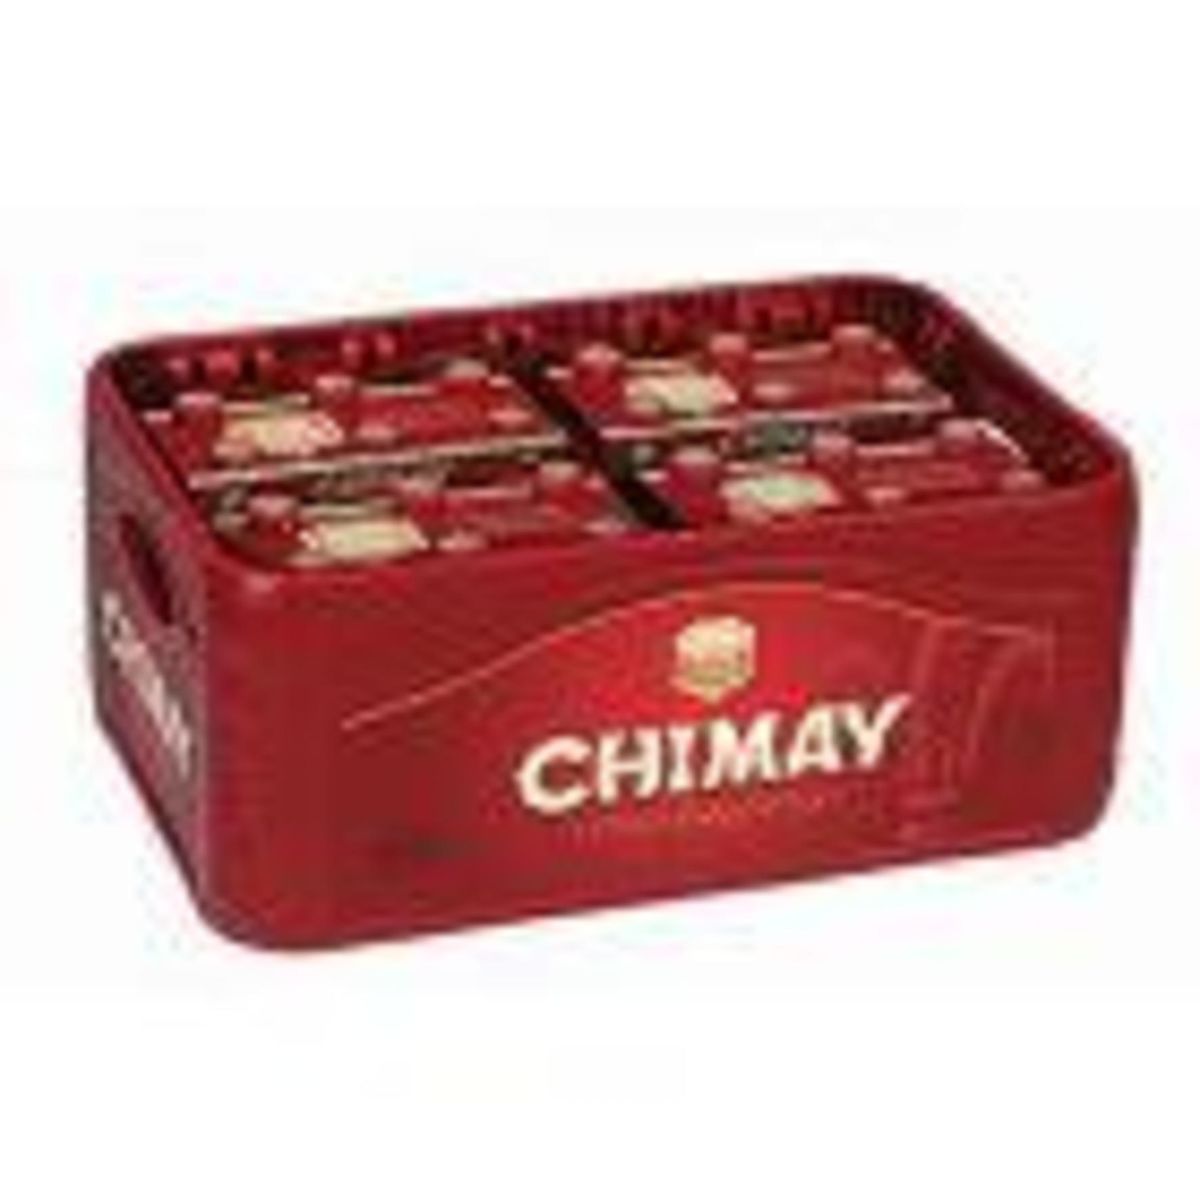 Chimay rood